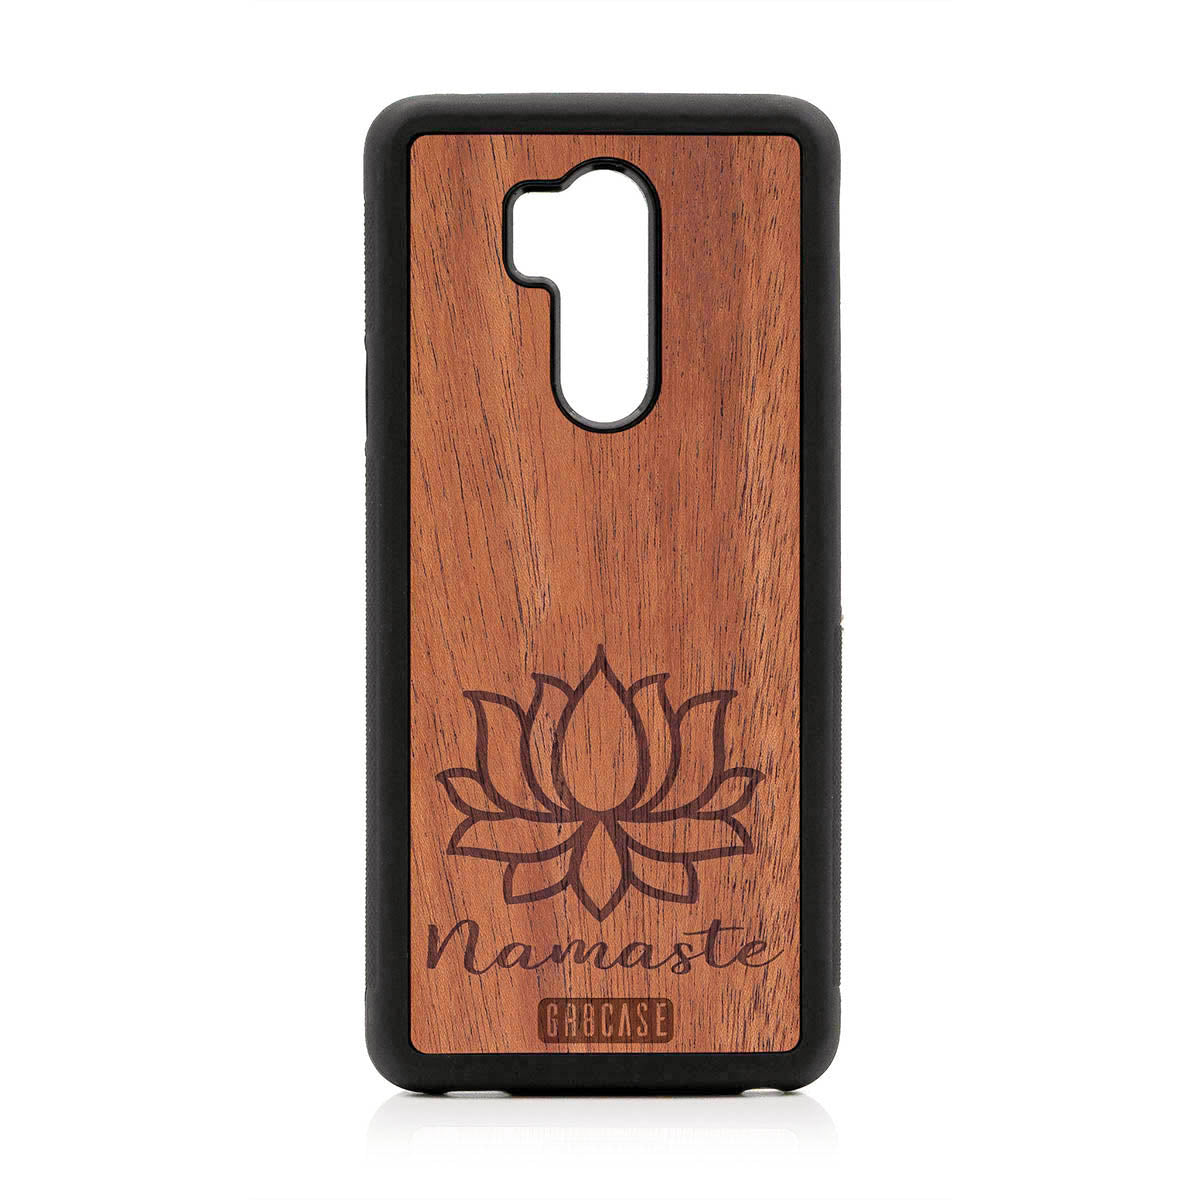 Namaste (Lotus Flower) Design Wood Case For LG G7 ThinQ